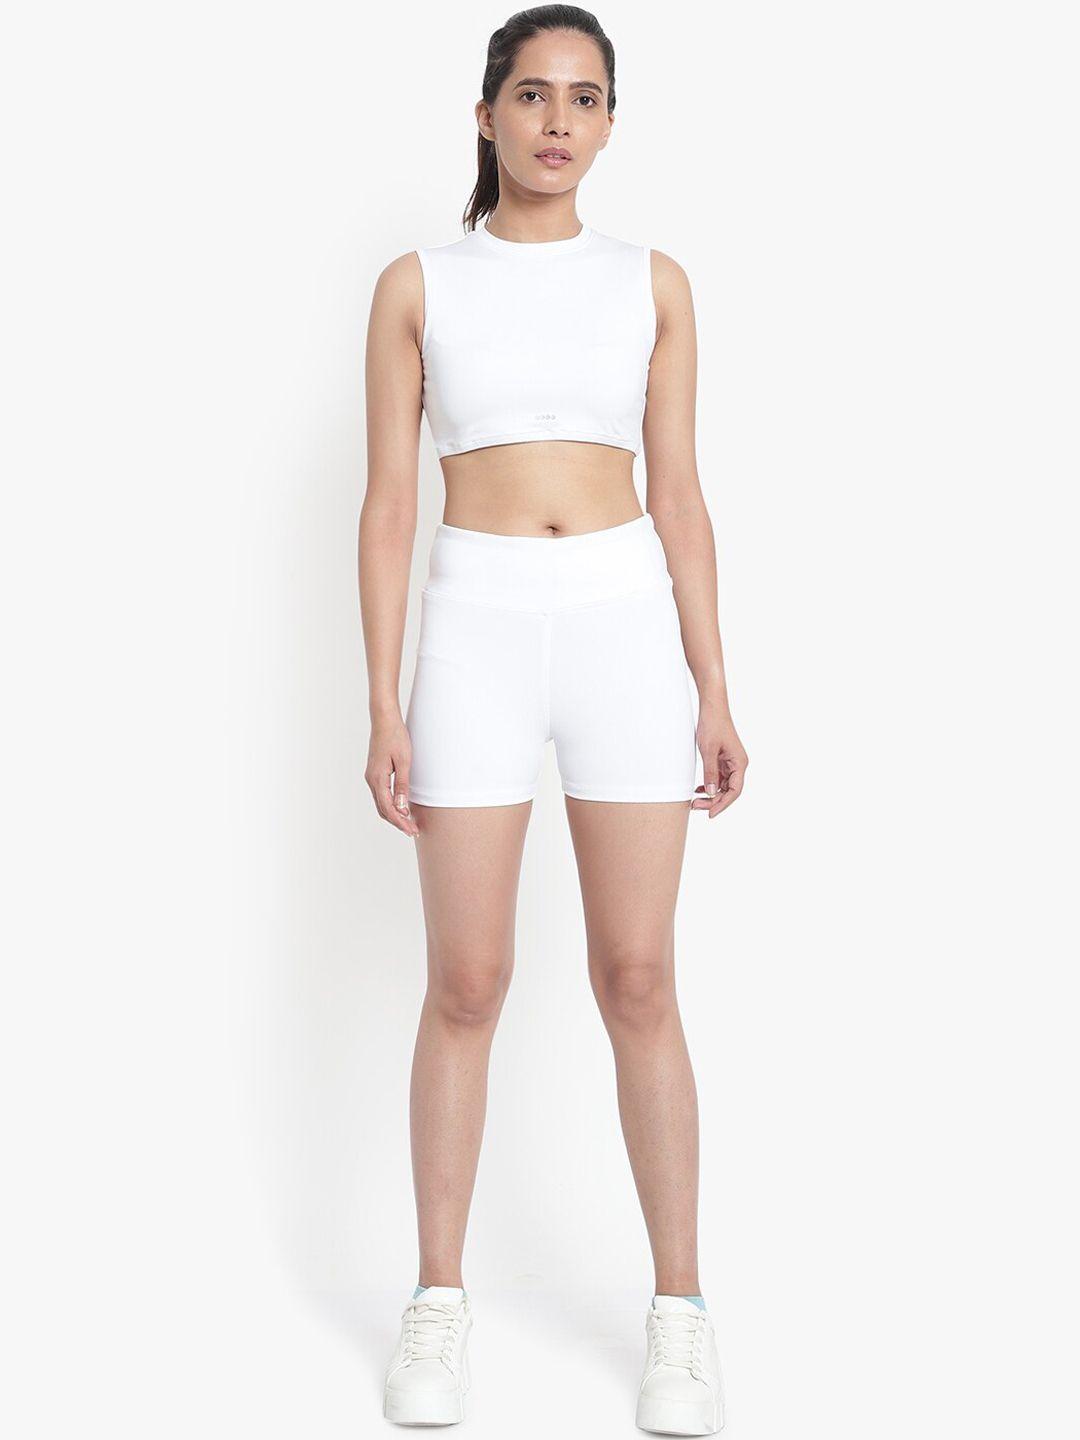 wearjukebox women white sports crop top with shorts